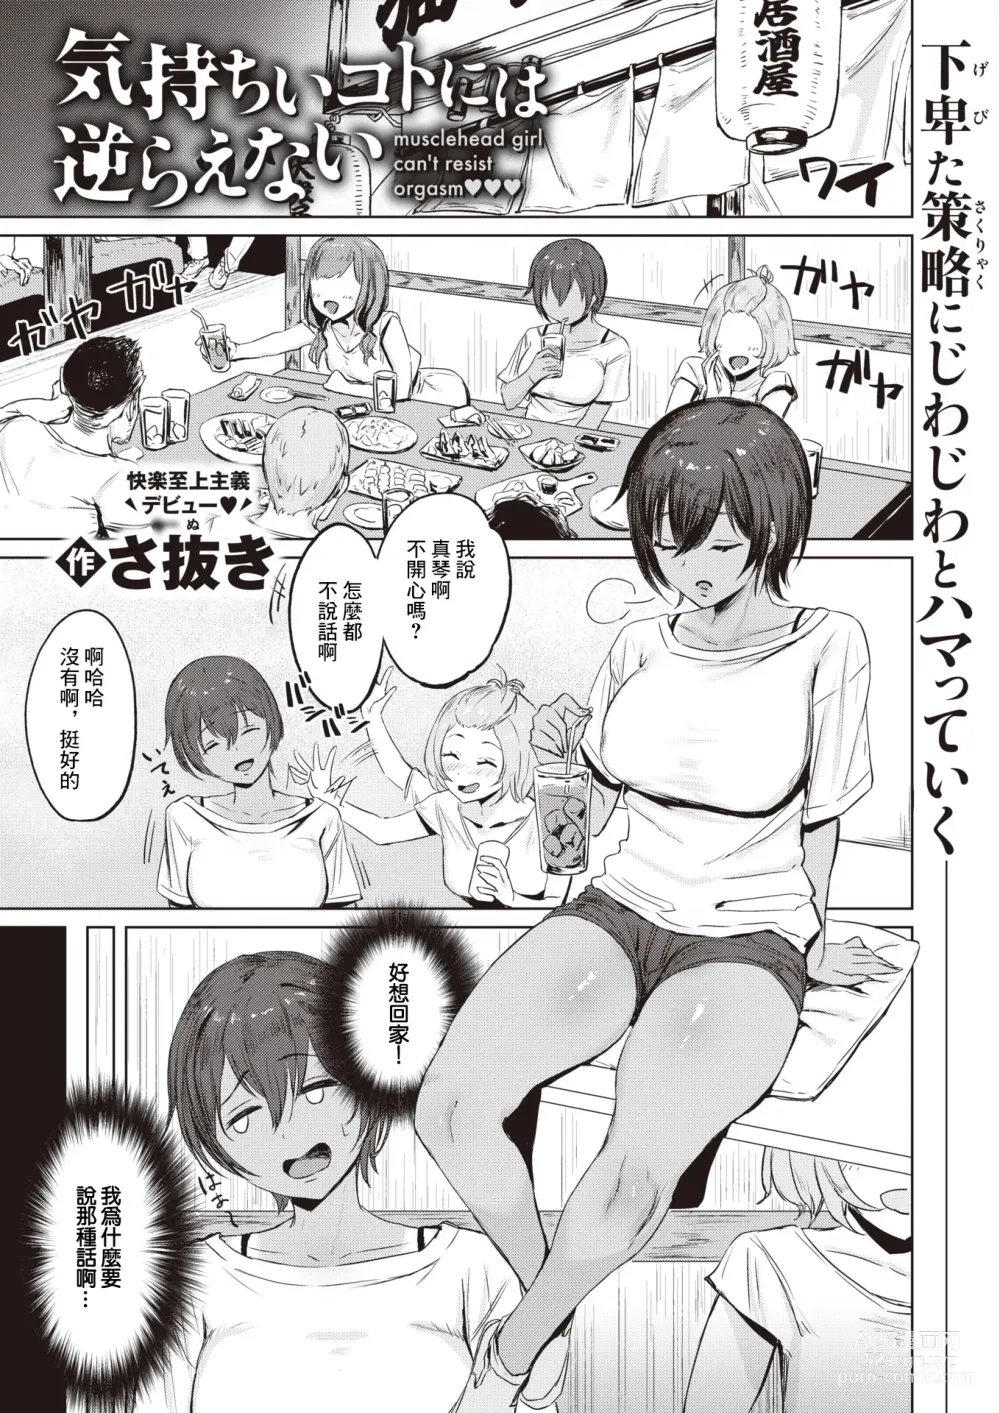 Page 2 of manga Kimochii  Koto  ni wa Sakaraenai - musclehead girl cant resist orgasm